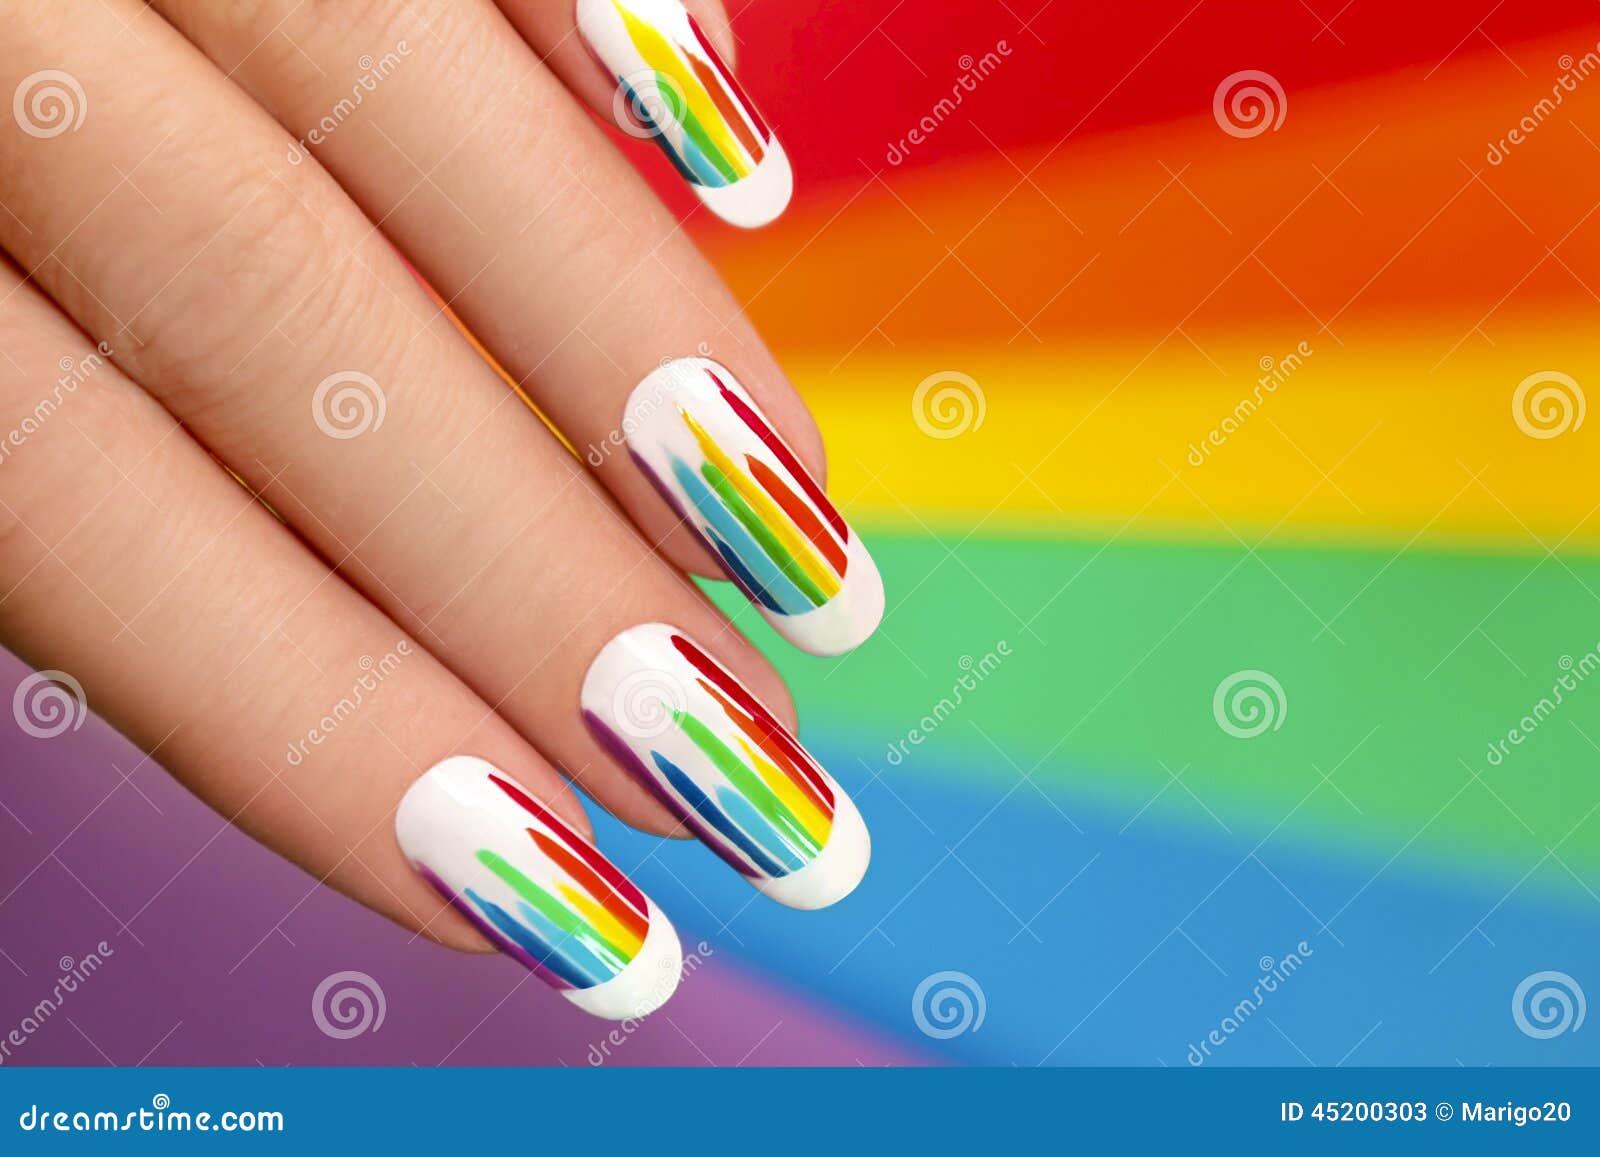 Rainbow manicure. stock image. Image of french, nails - 45200303